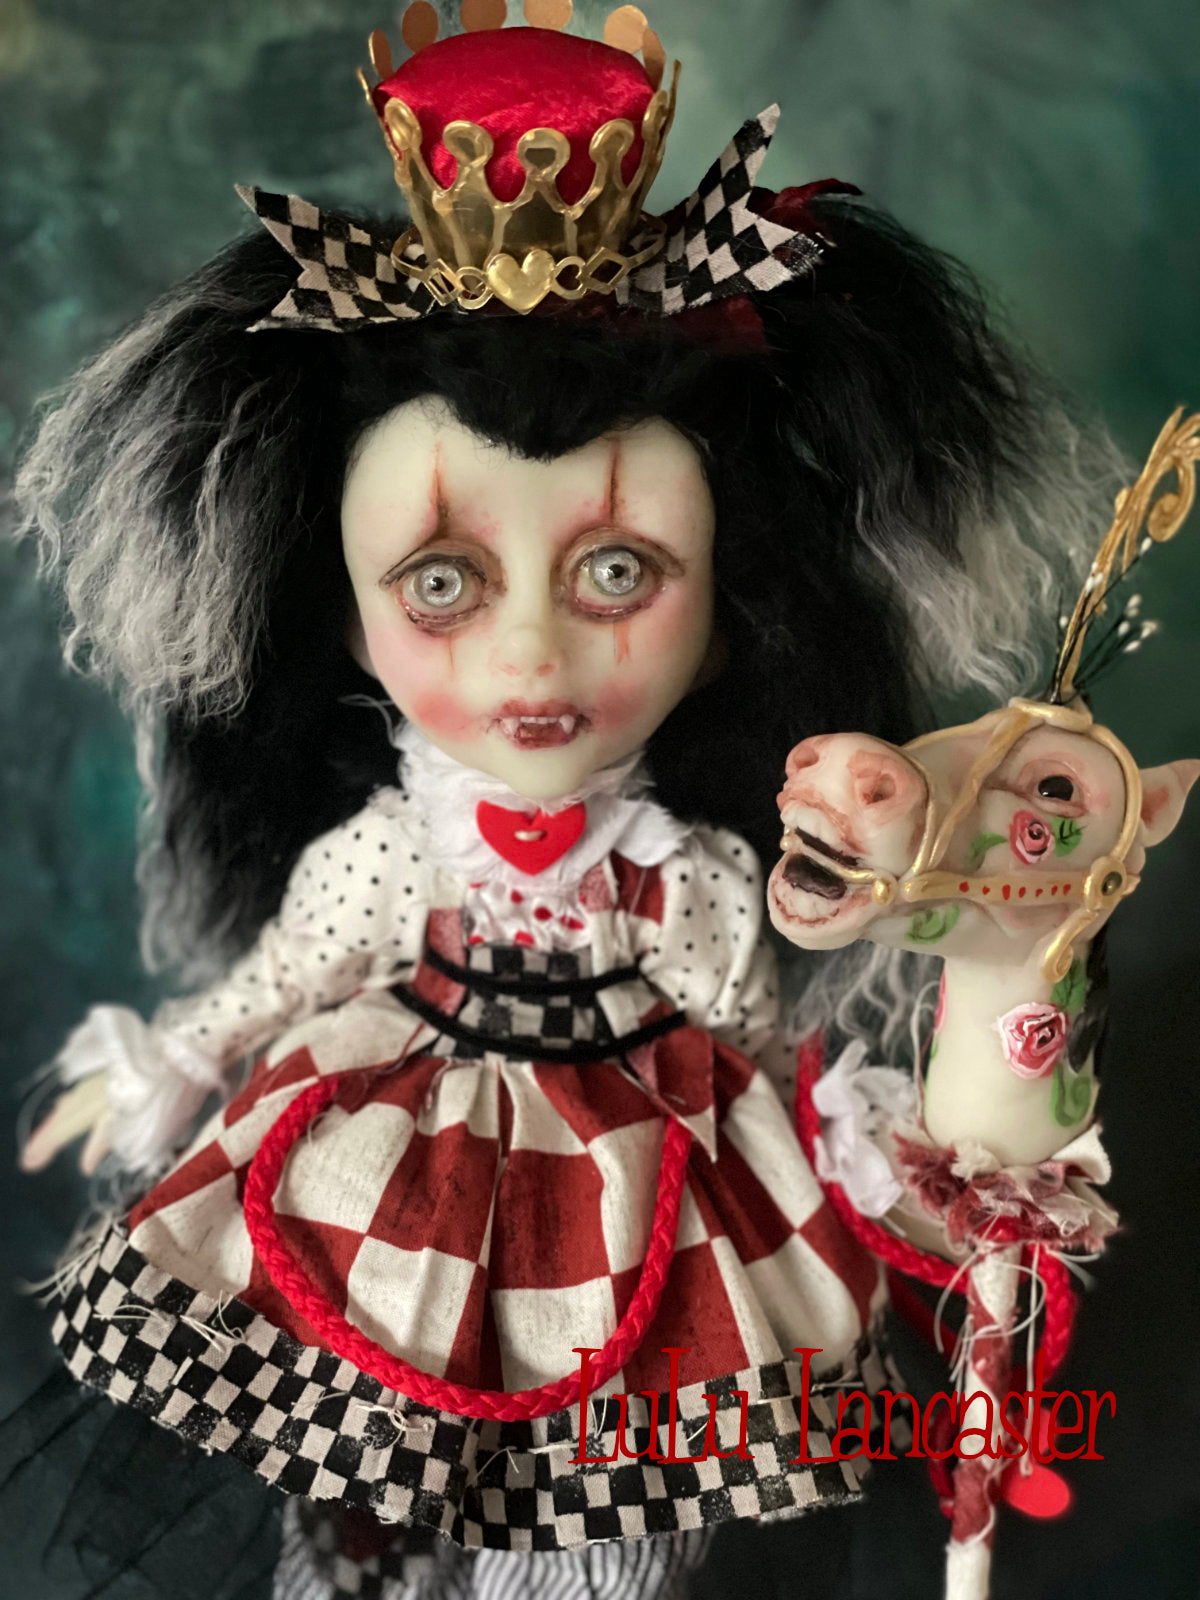 Queenie and her Carousel Stick pony Valloween Vampire Original LuLu Lancaster Art Doll